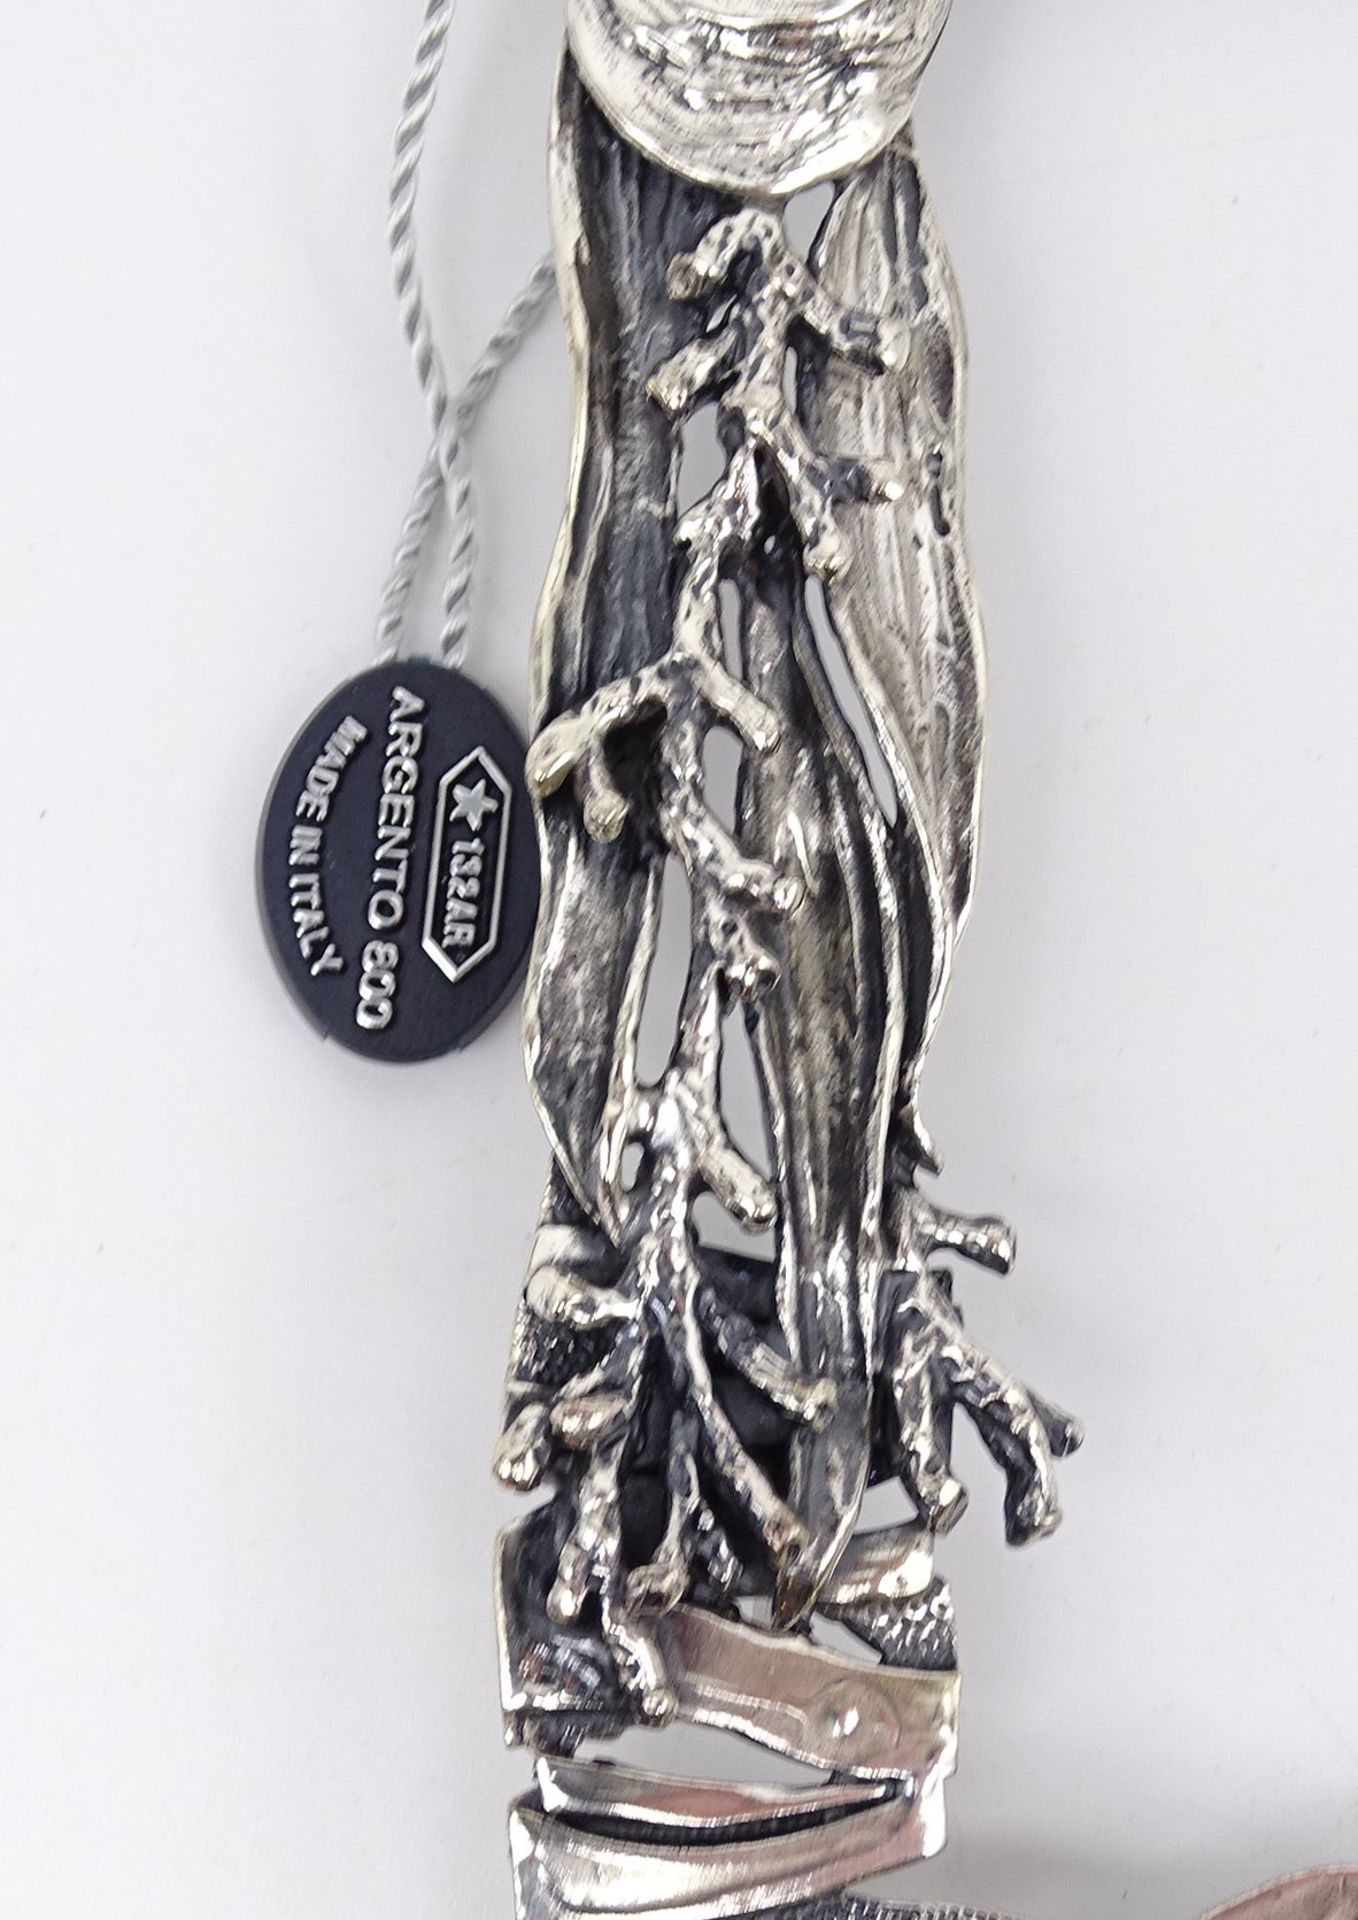 massiver Silber-Fotorahmen-800-, Silber, NP 380$, neuwertig, 15x12 cm, 197 gr. - Image 4 of 7